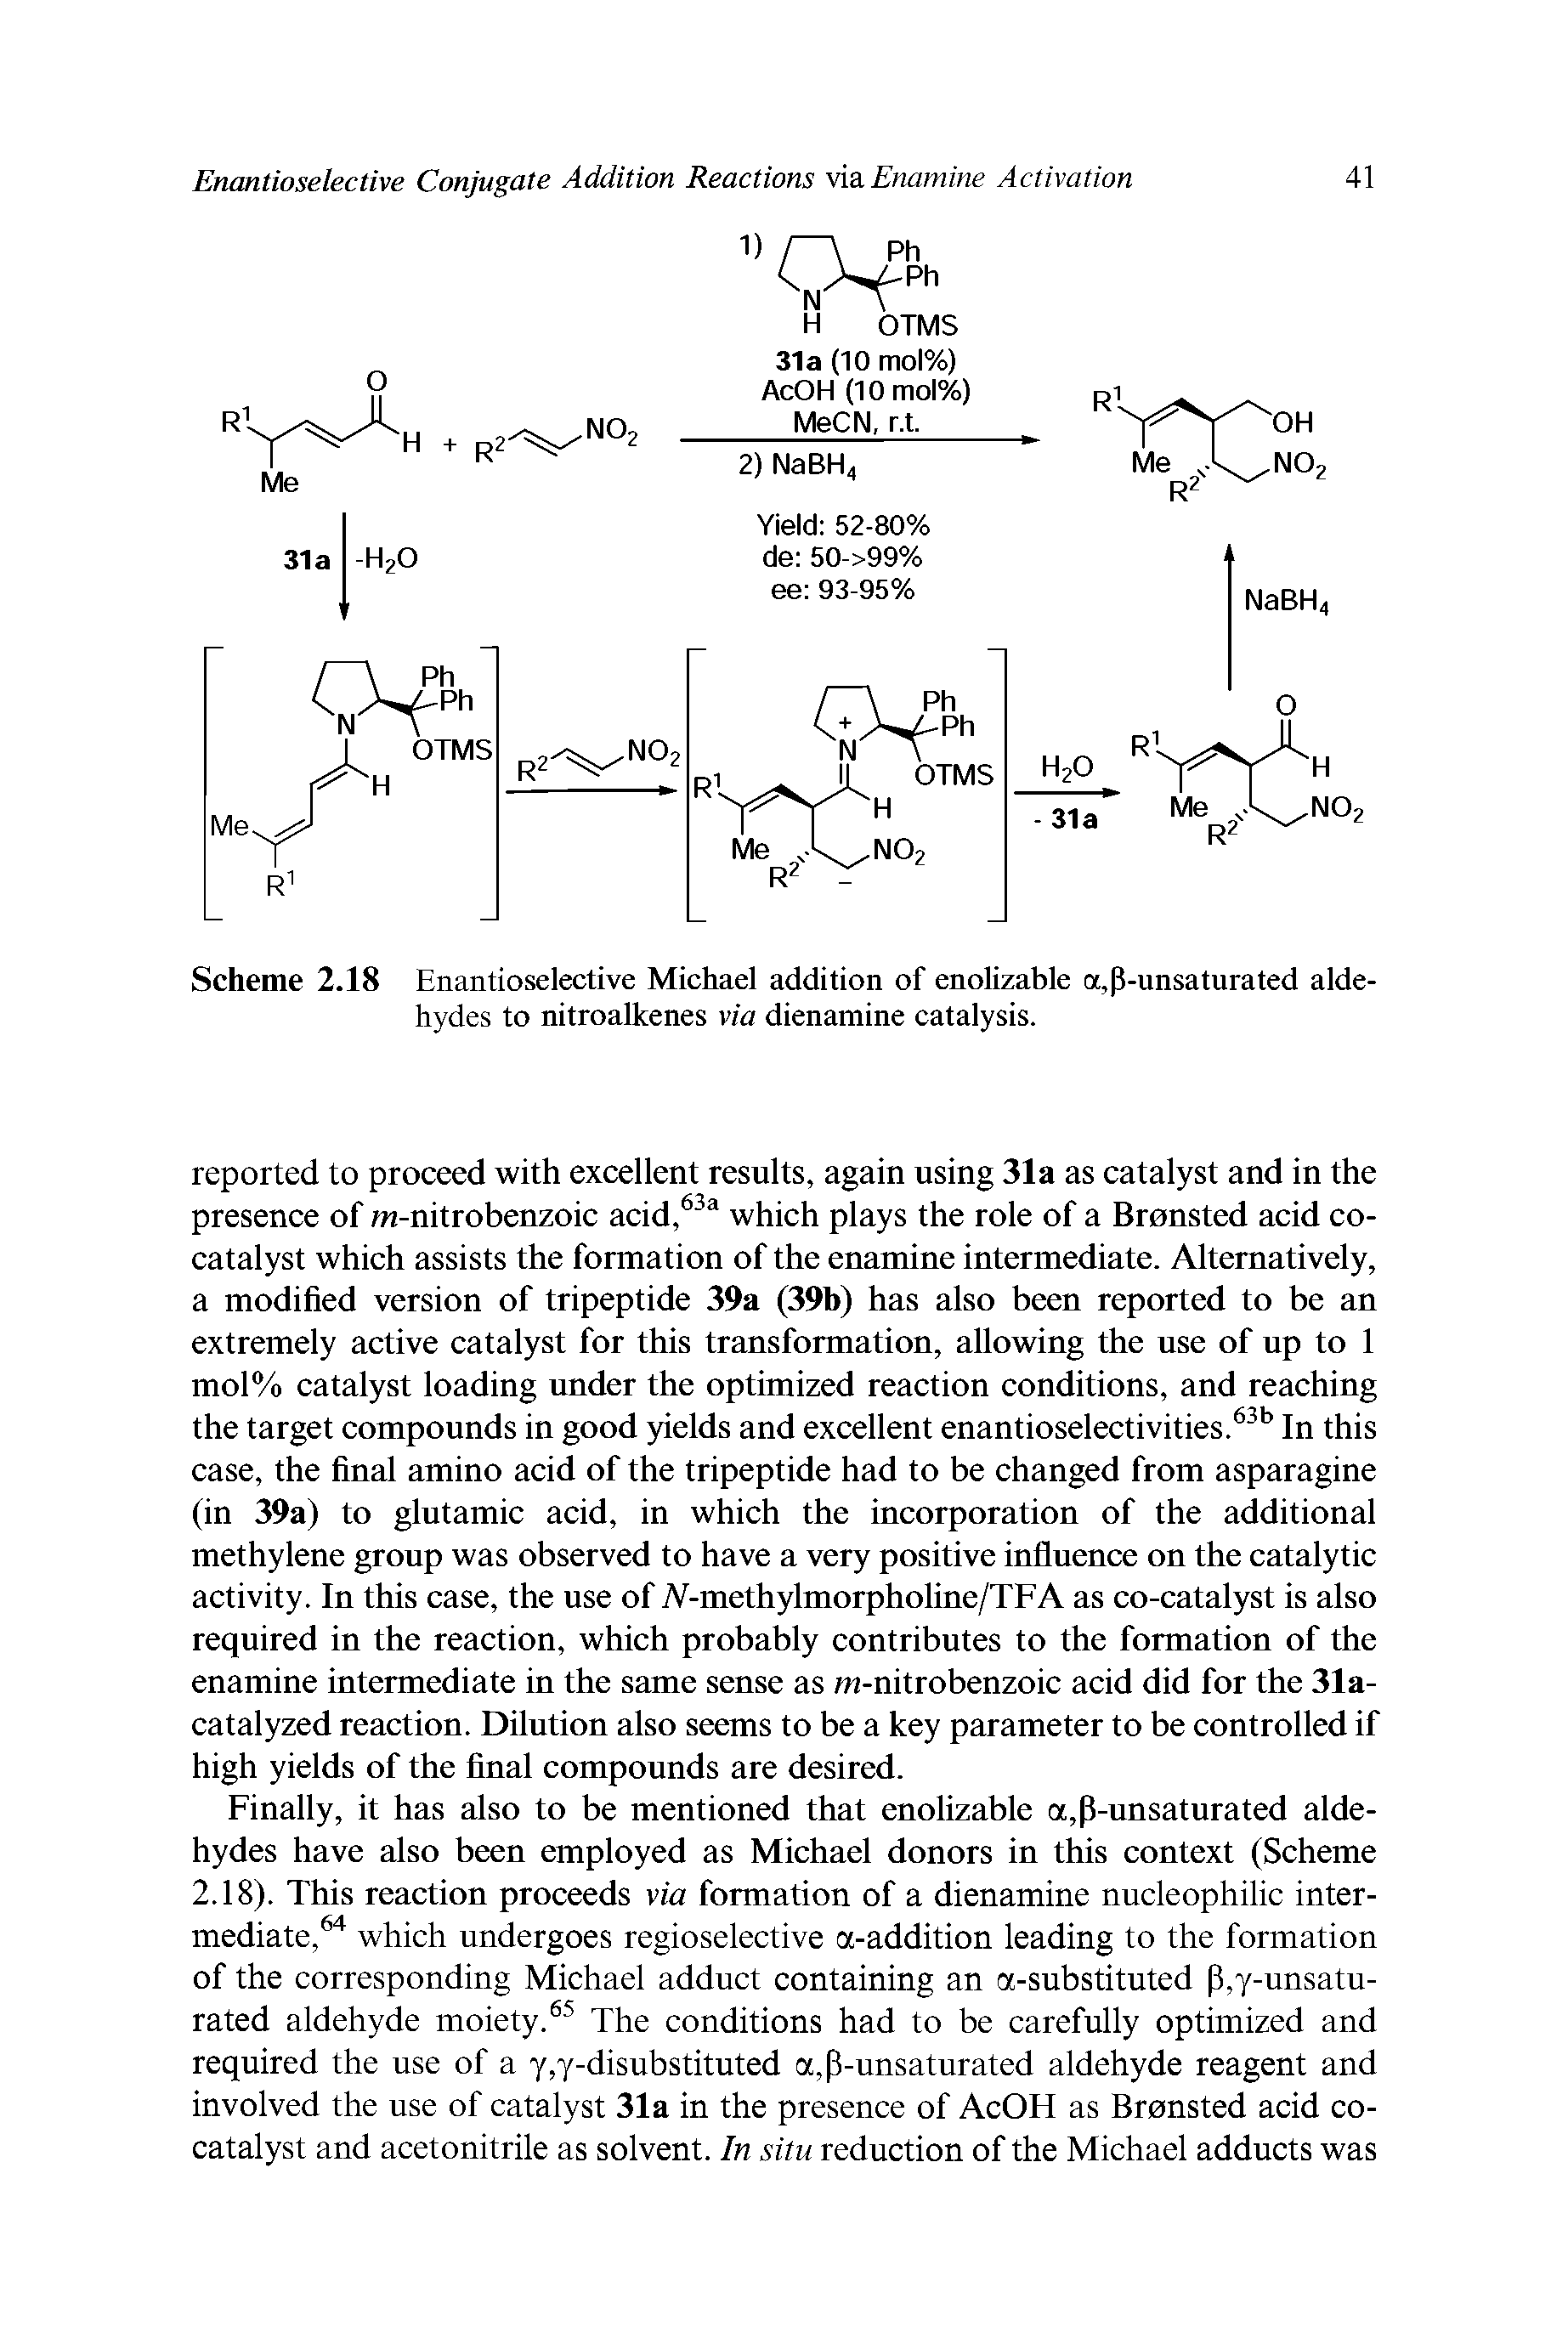 Scheme 2.18 Enantioselective Michael addition of enolizable ot,p-unsaturated aldehydes to nitroalkenes via dienamine catalysis.